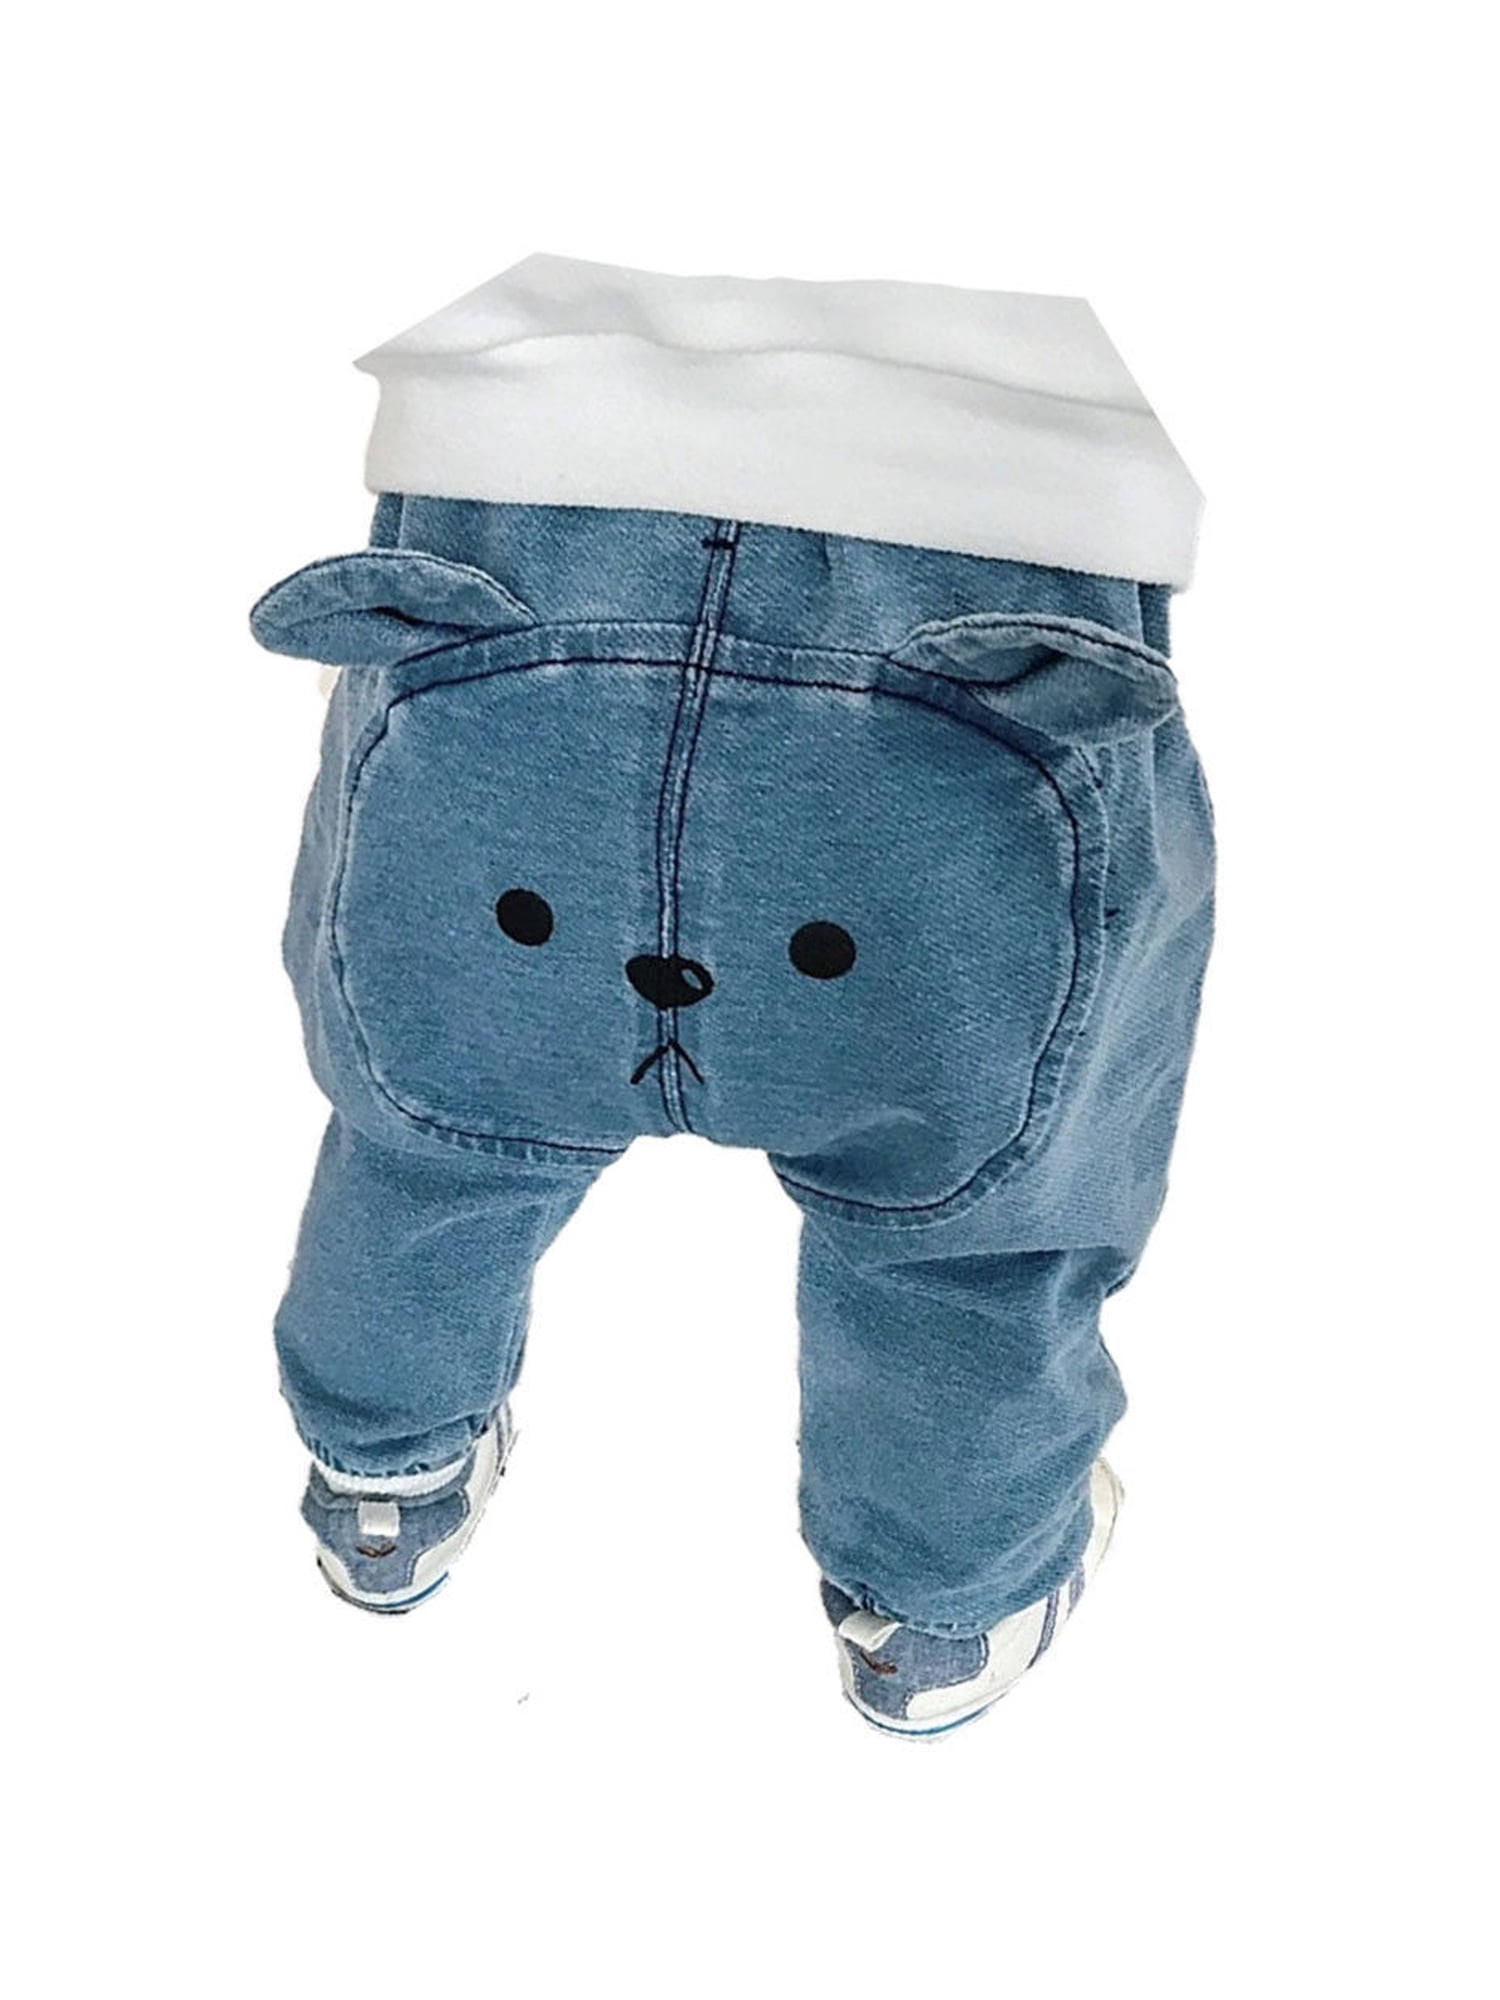 jeans for newborn boy